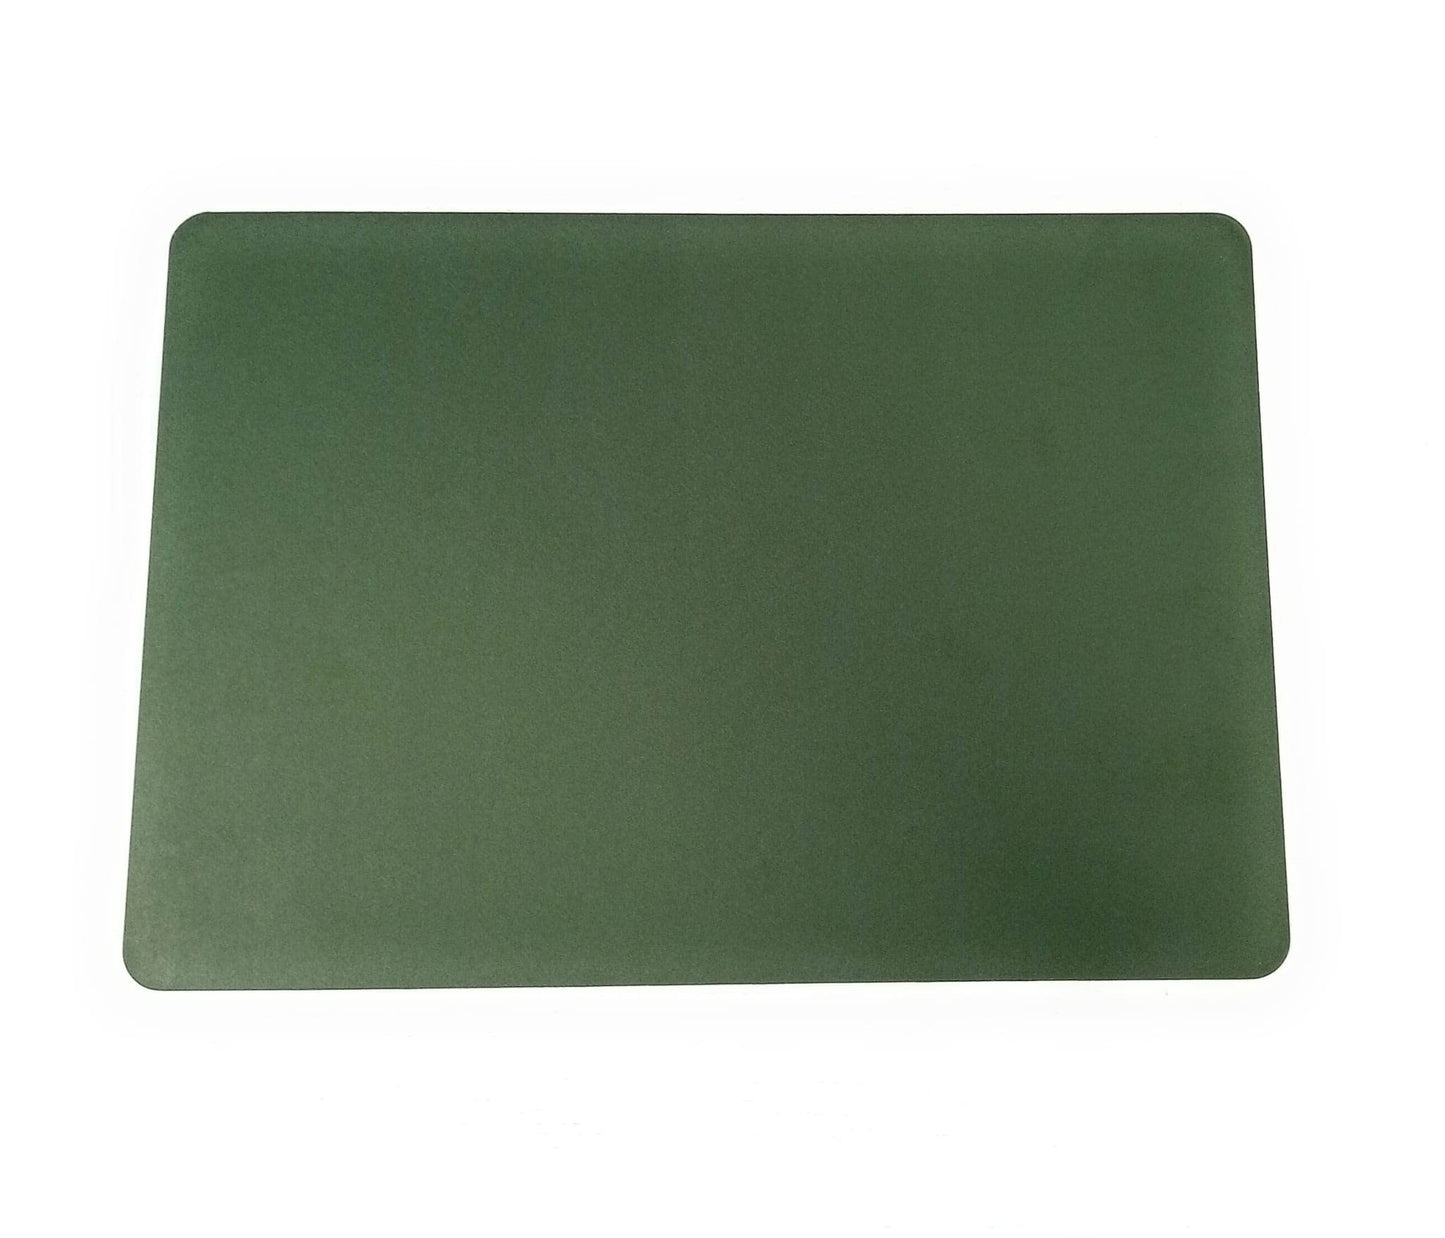 Set of 4 "Style" Placemats designed by Enzo De Gasperi, solid colour, petroleum green colour, in plastic and rubber, measures 43 cm x 30 cm